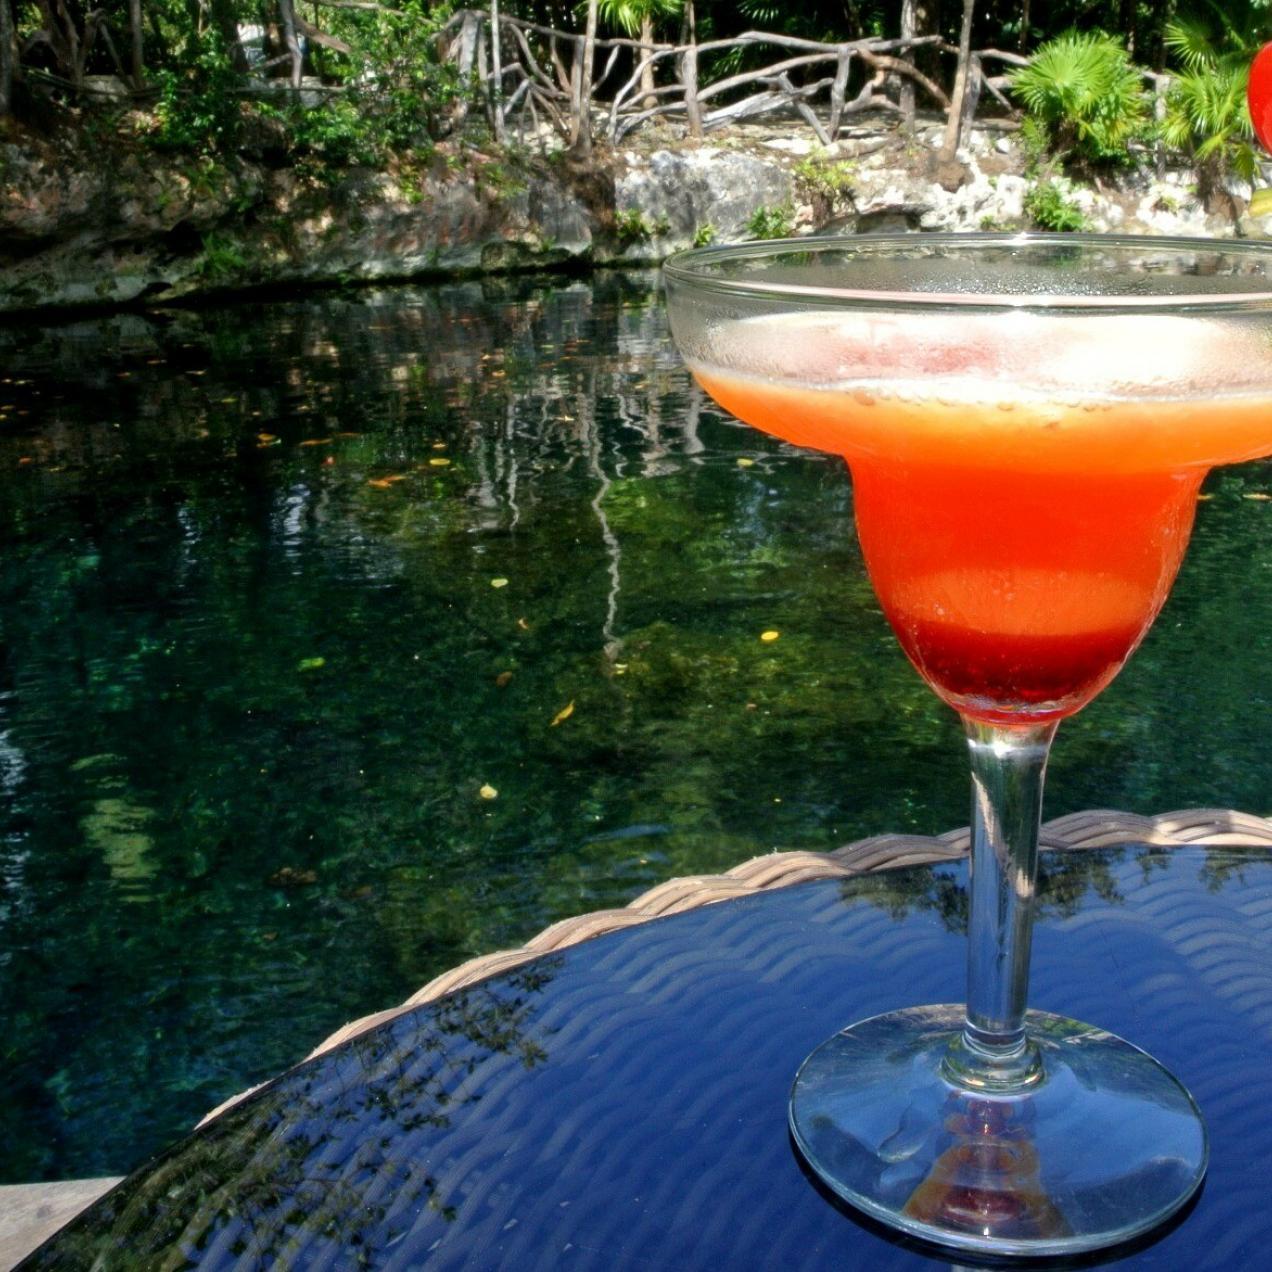 The Sandos Cocktail